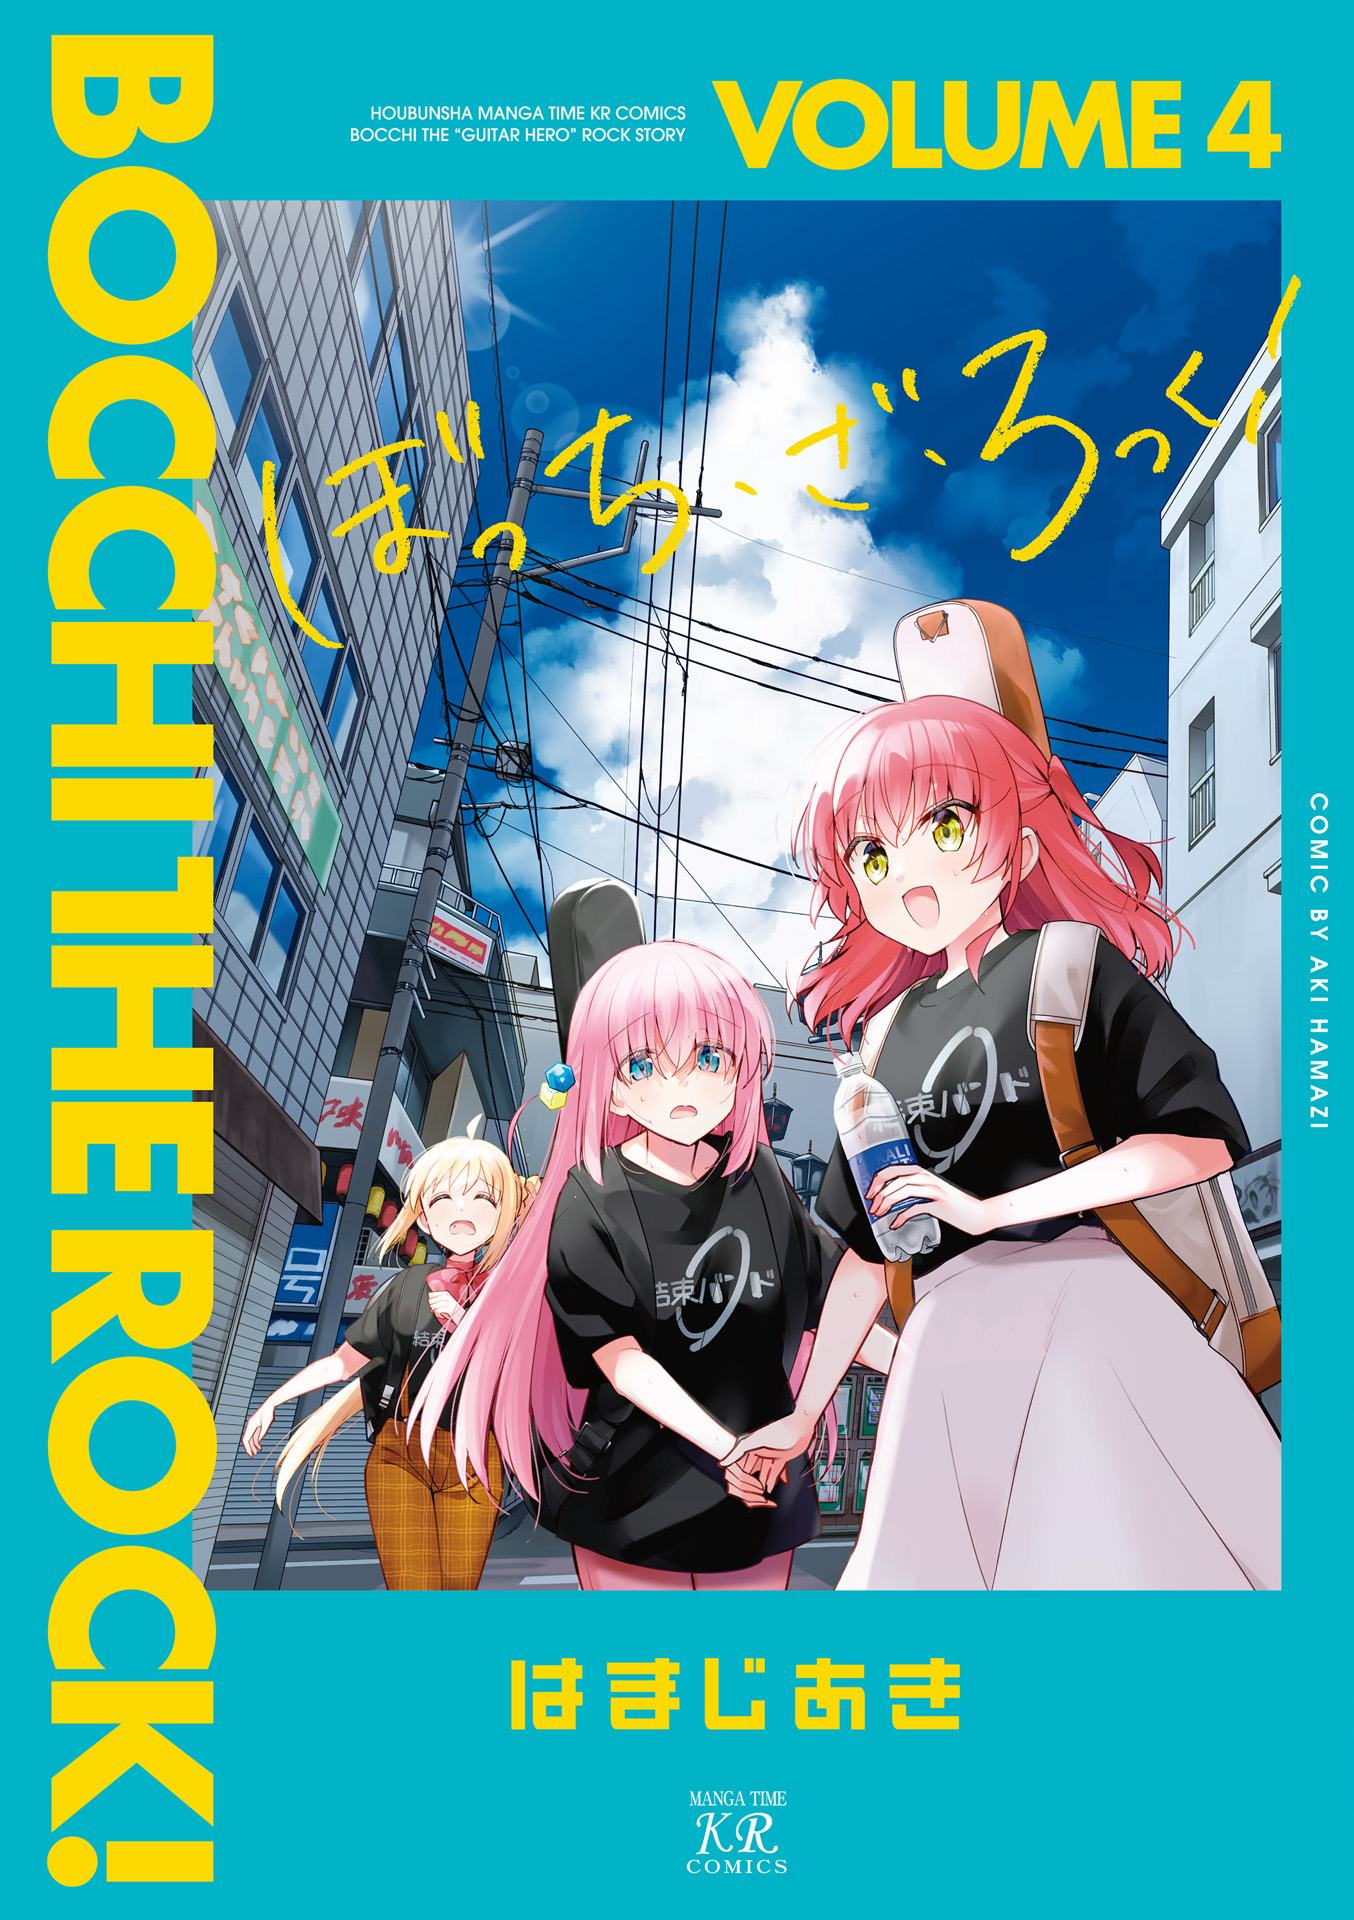 Bocchi the Rock Manga Author Draws Bocchi for Anime Episode 8